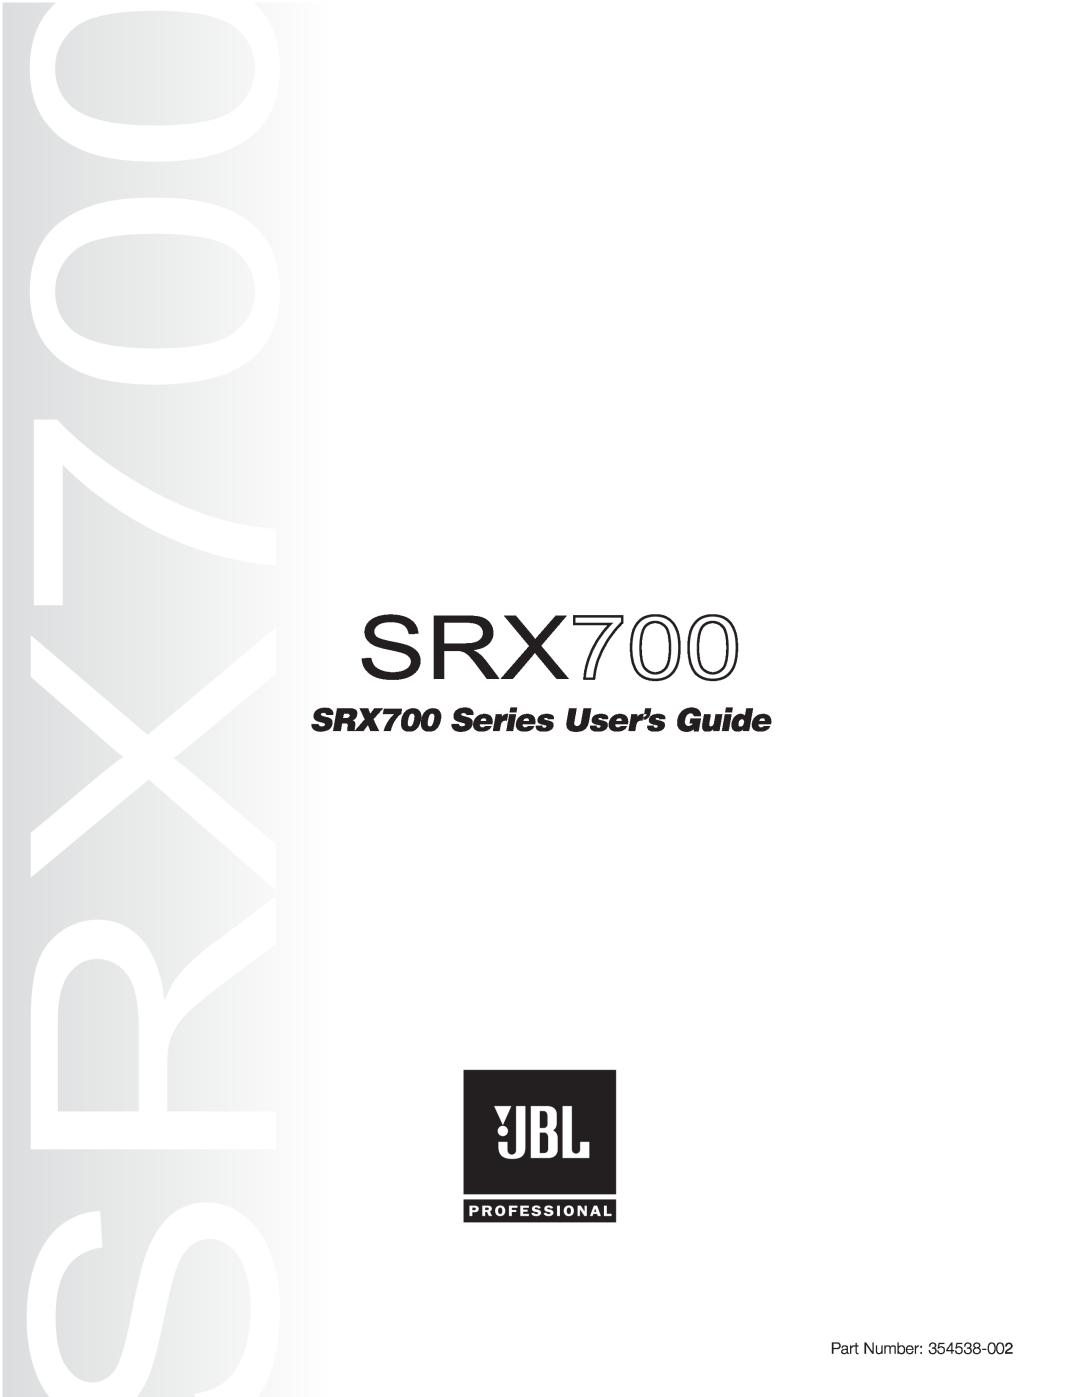 JBL manual SRX700 Series User’s Guide, Part Number 